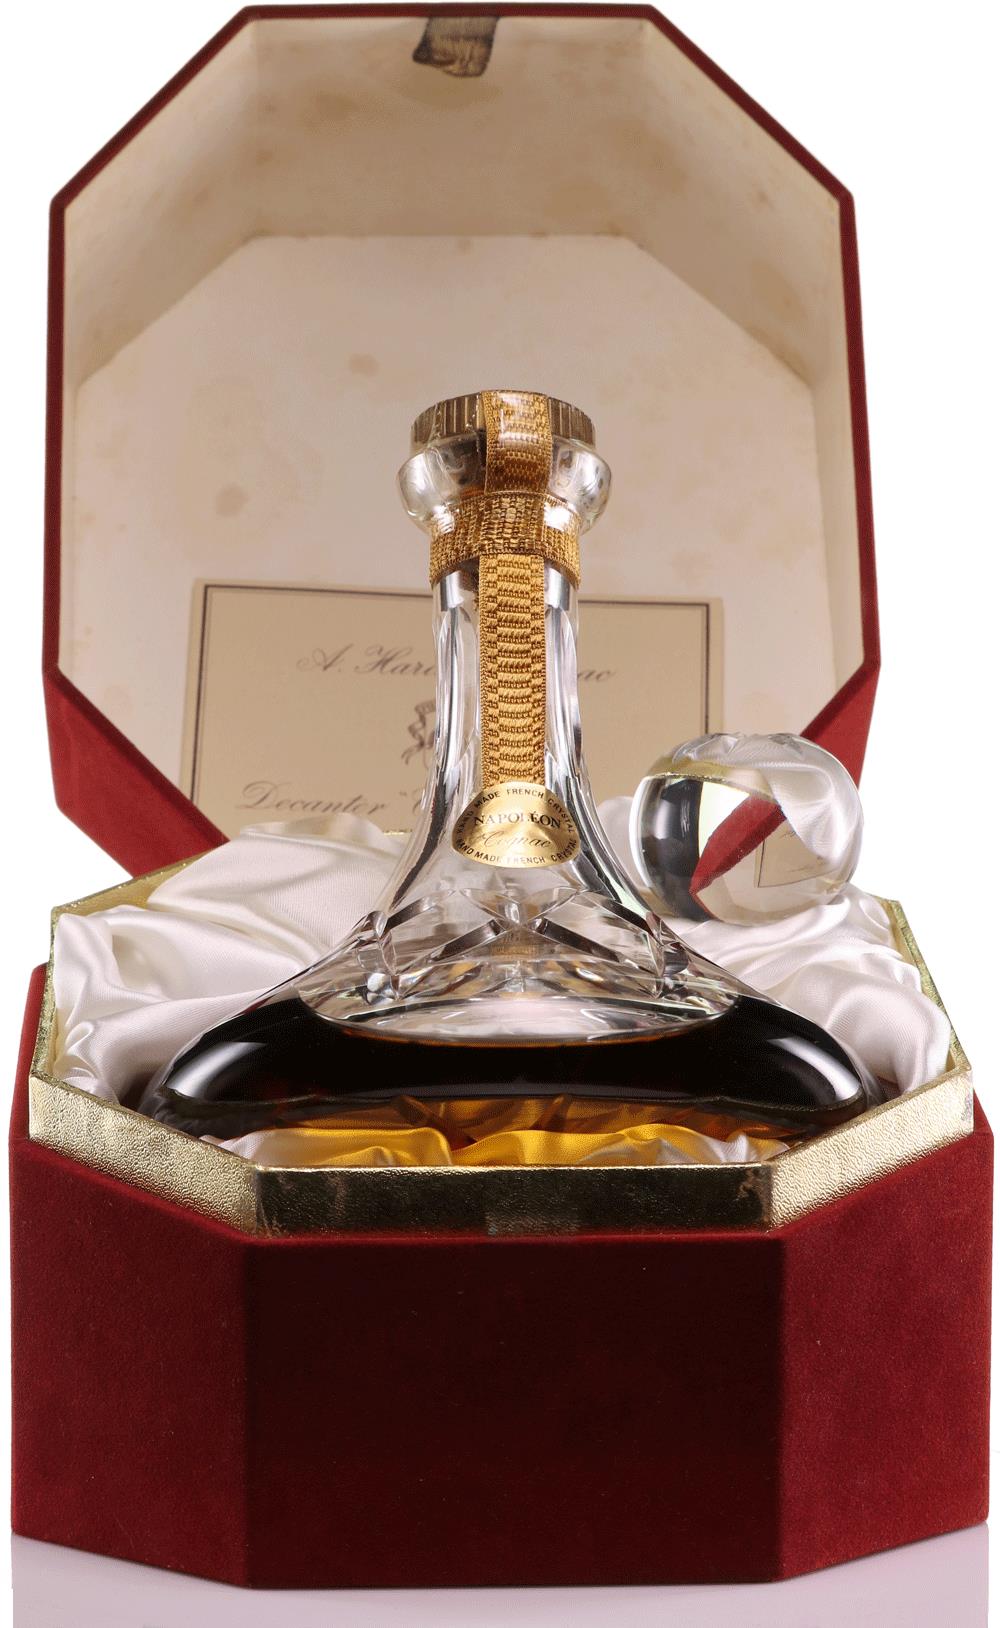 Cognac Hardy A. Napoleon Cristal Carafe